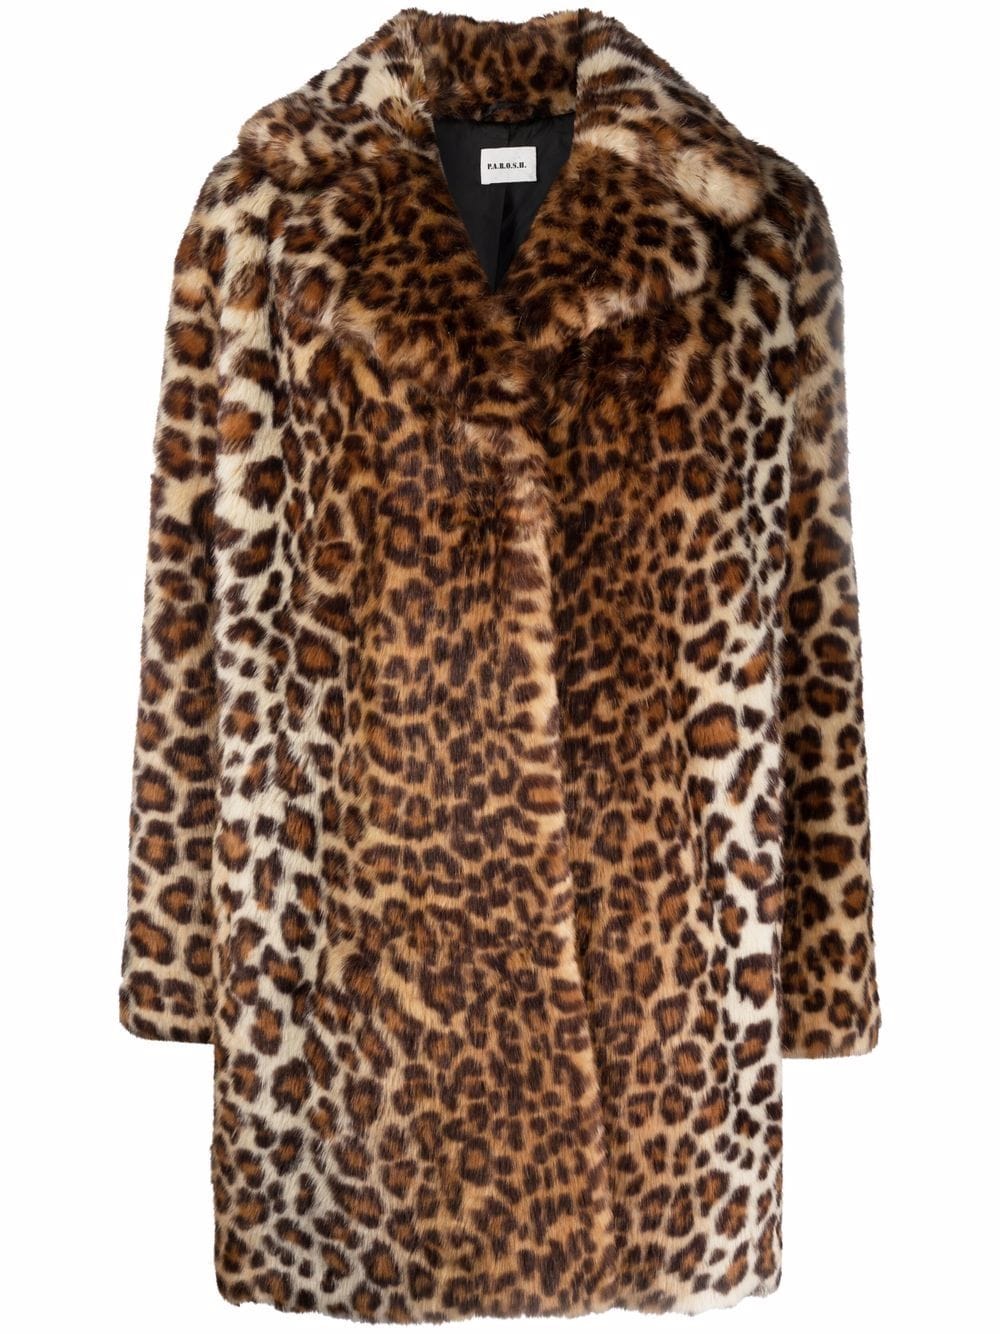 P.A.R.O.S.H. Leopard Print Faux Fur Coat - Farfetch